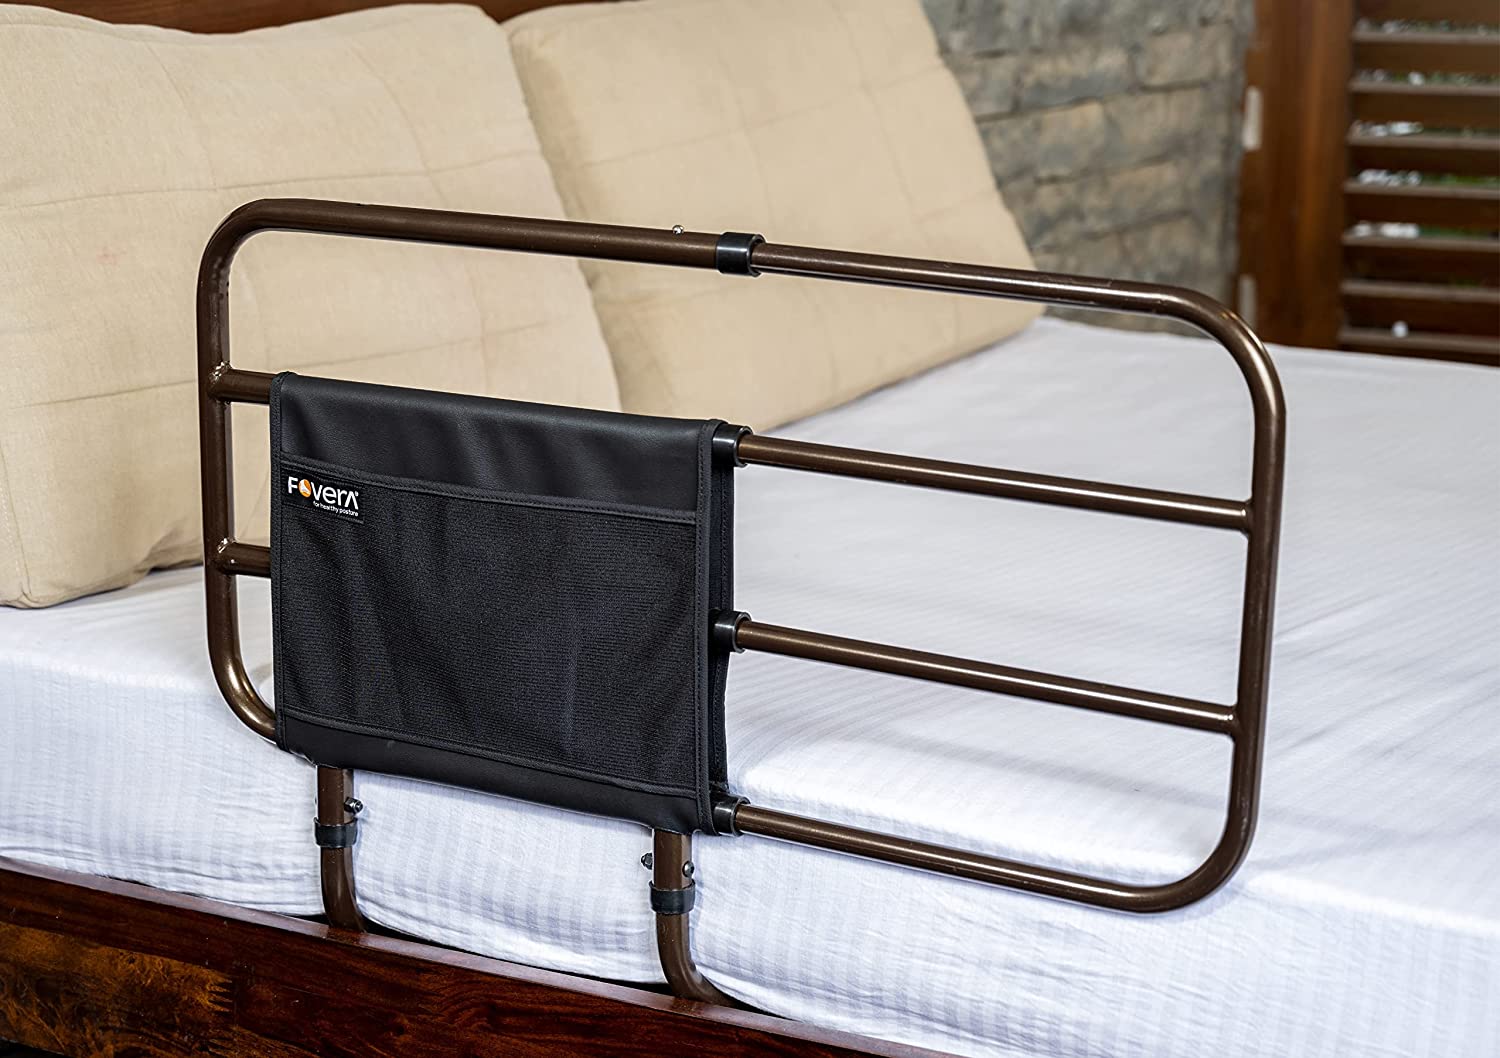 FOVERA Adjustable Bed Safety Rail